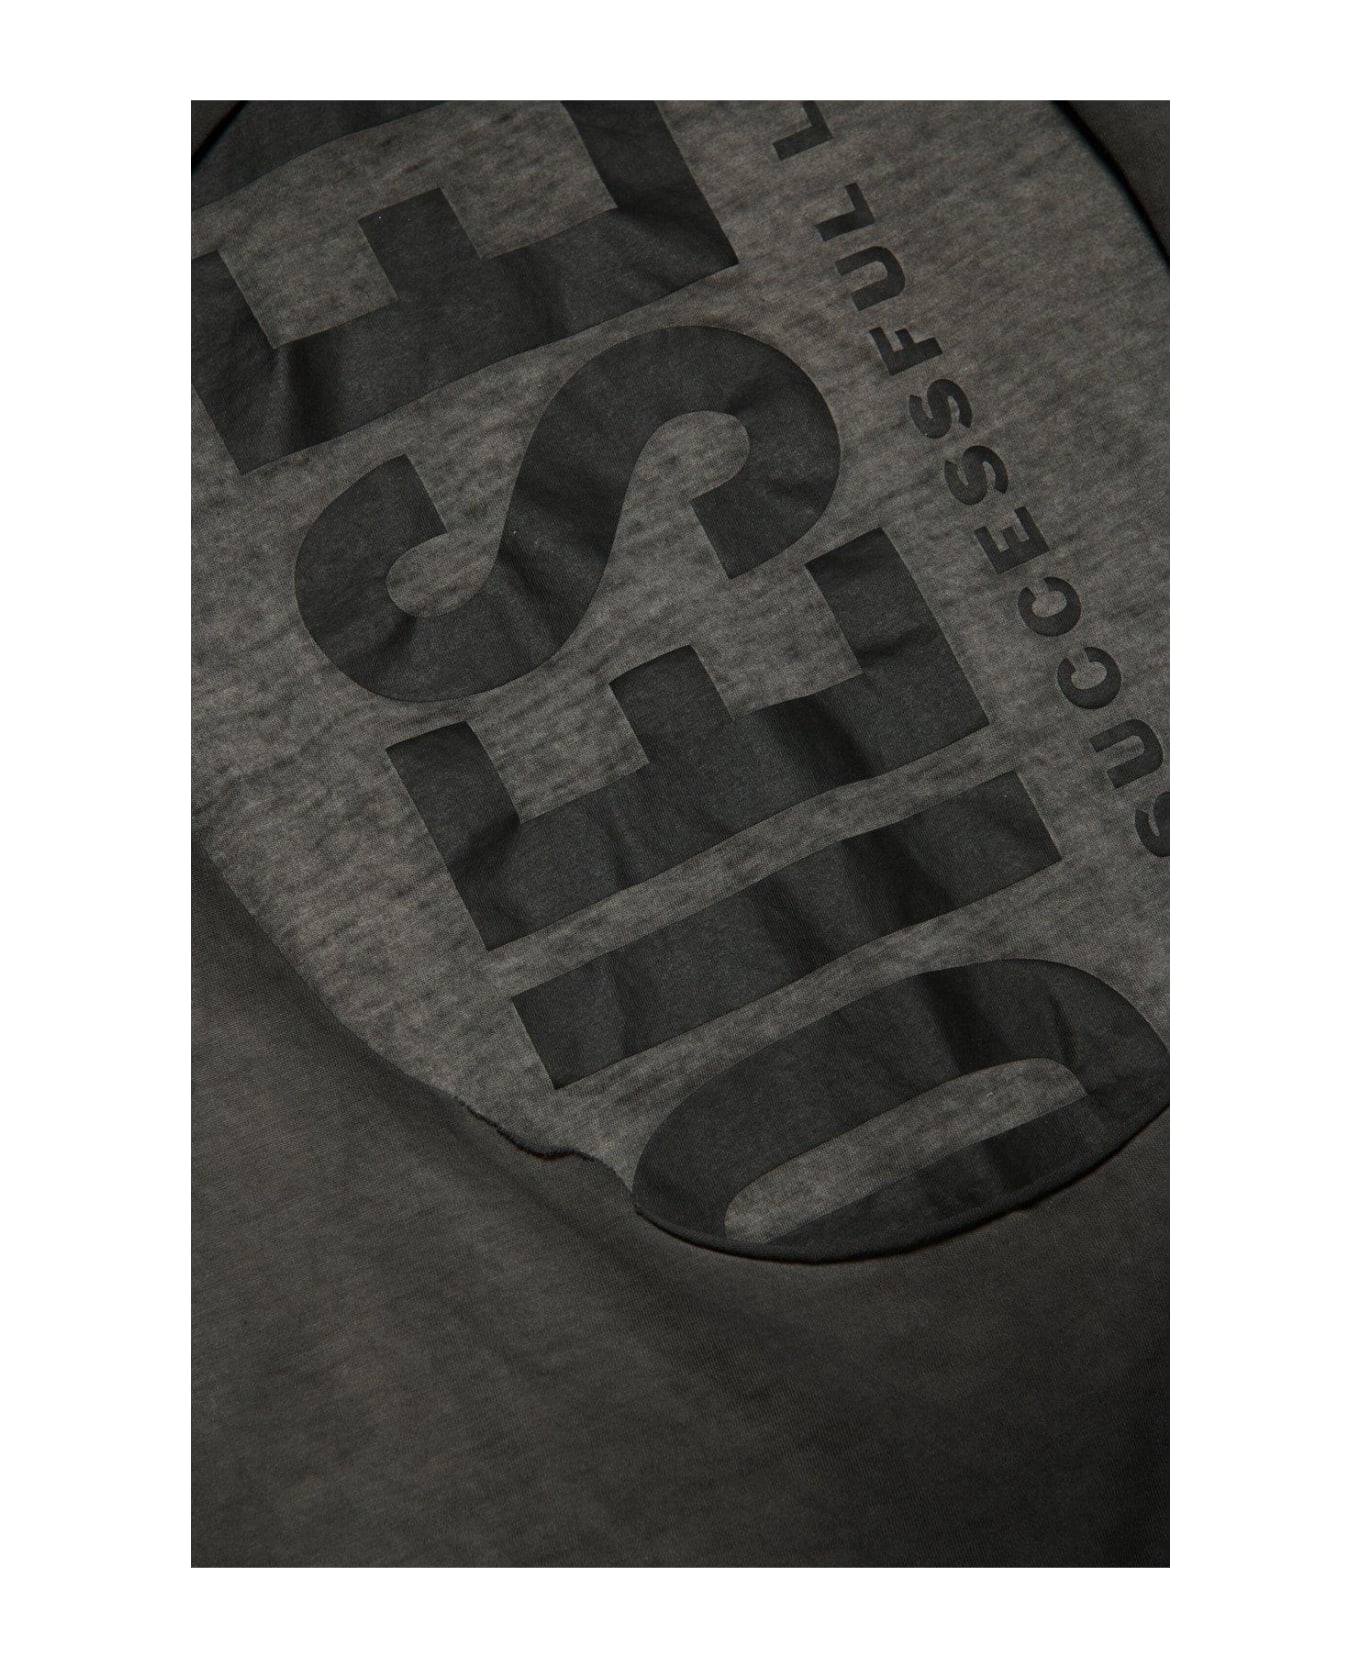 Diesel Tashy Over Logo Printed T-shirt